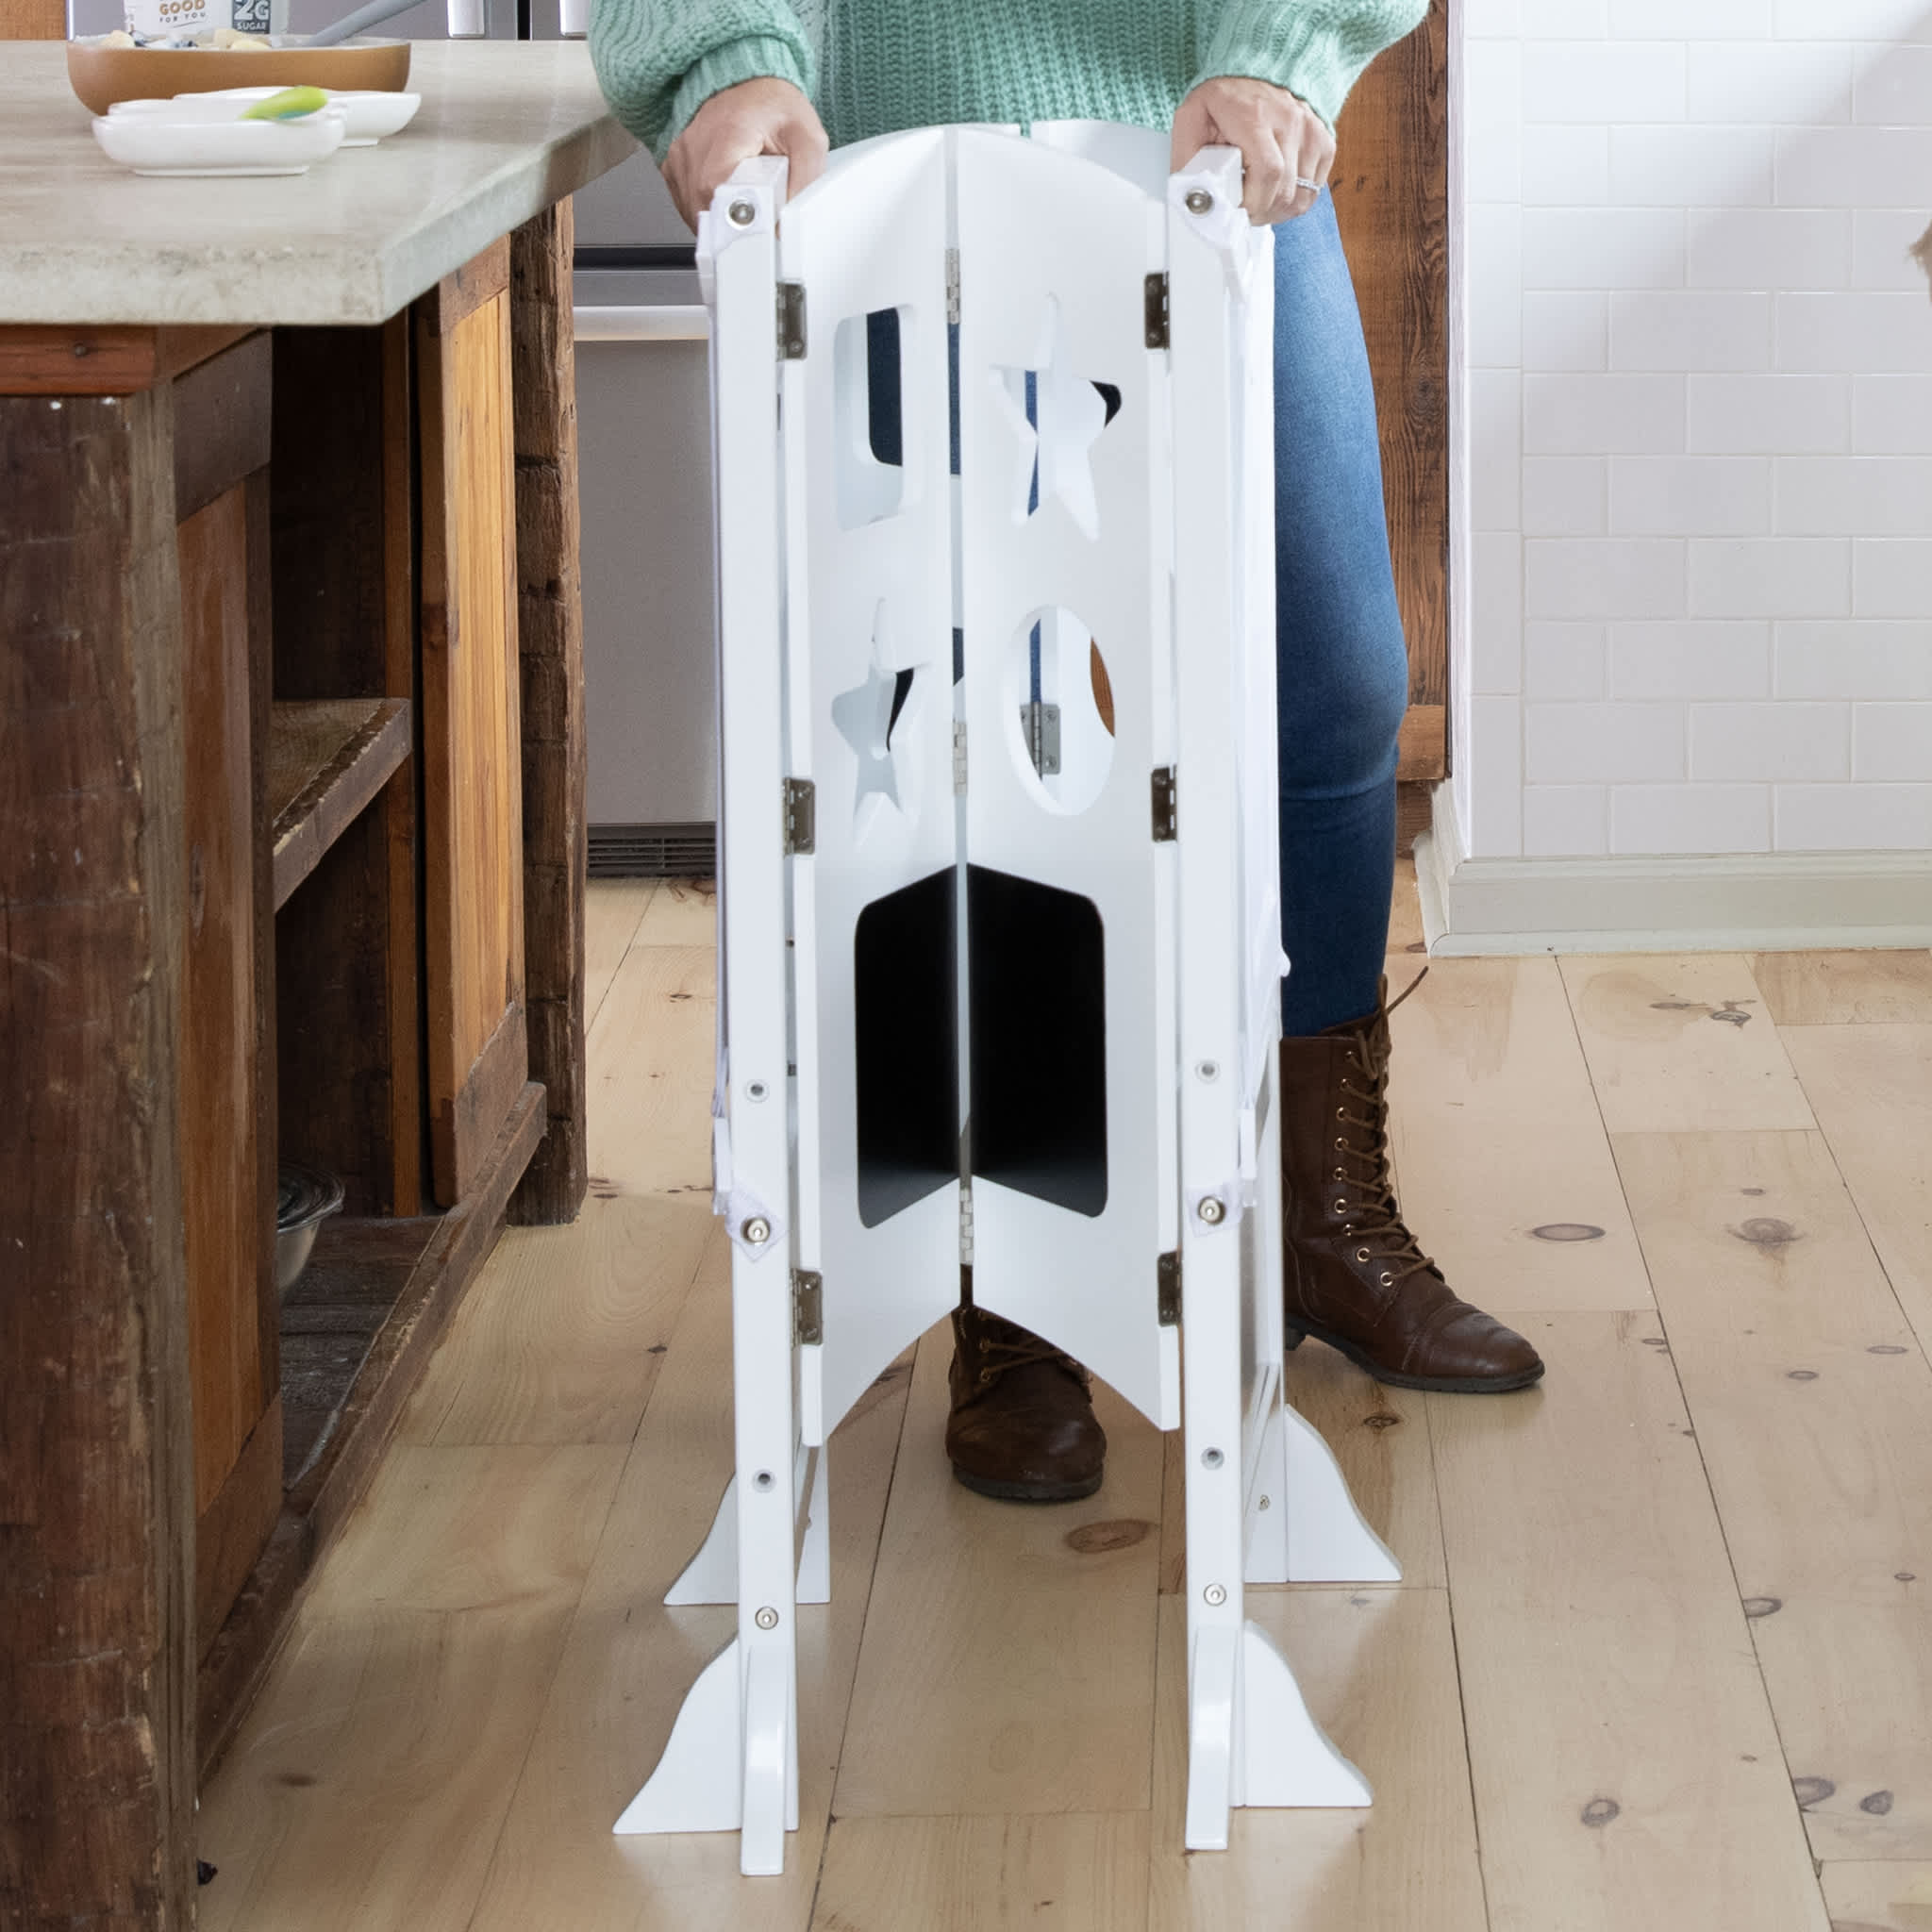 The original folding Kitchen Helper stool